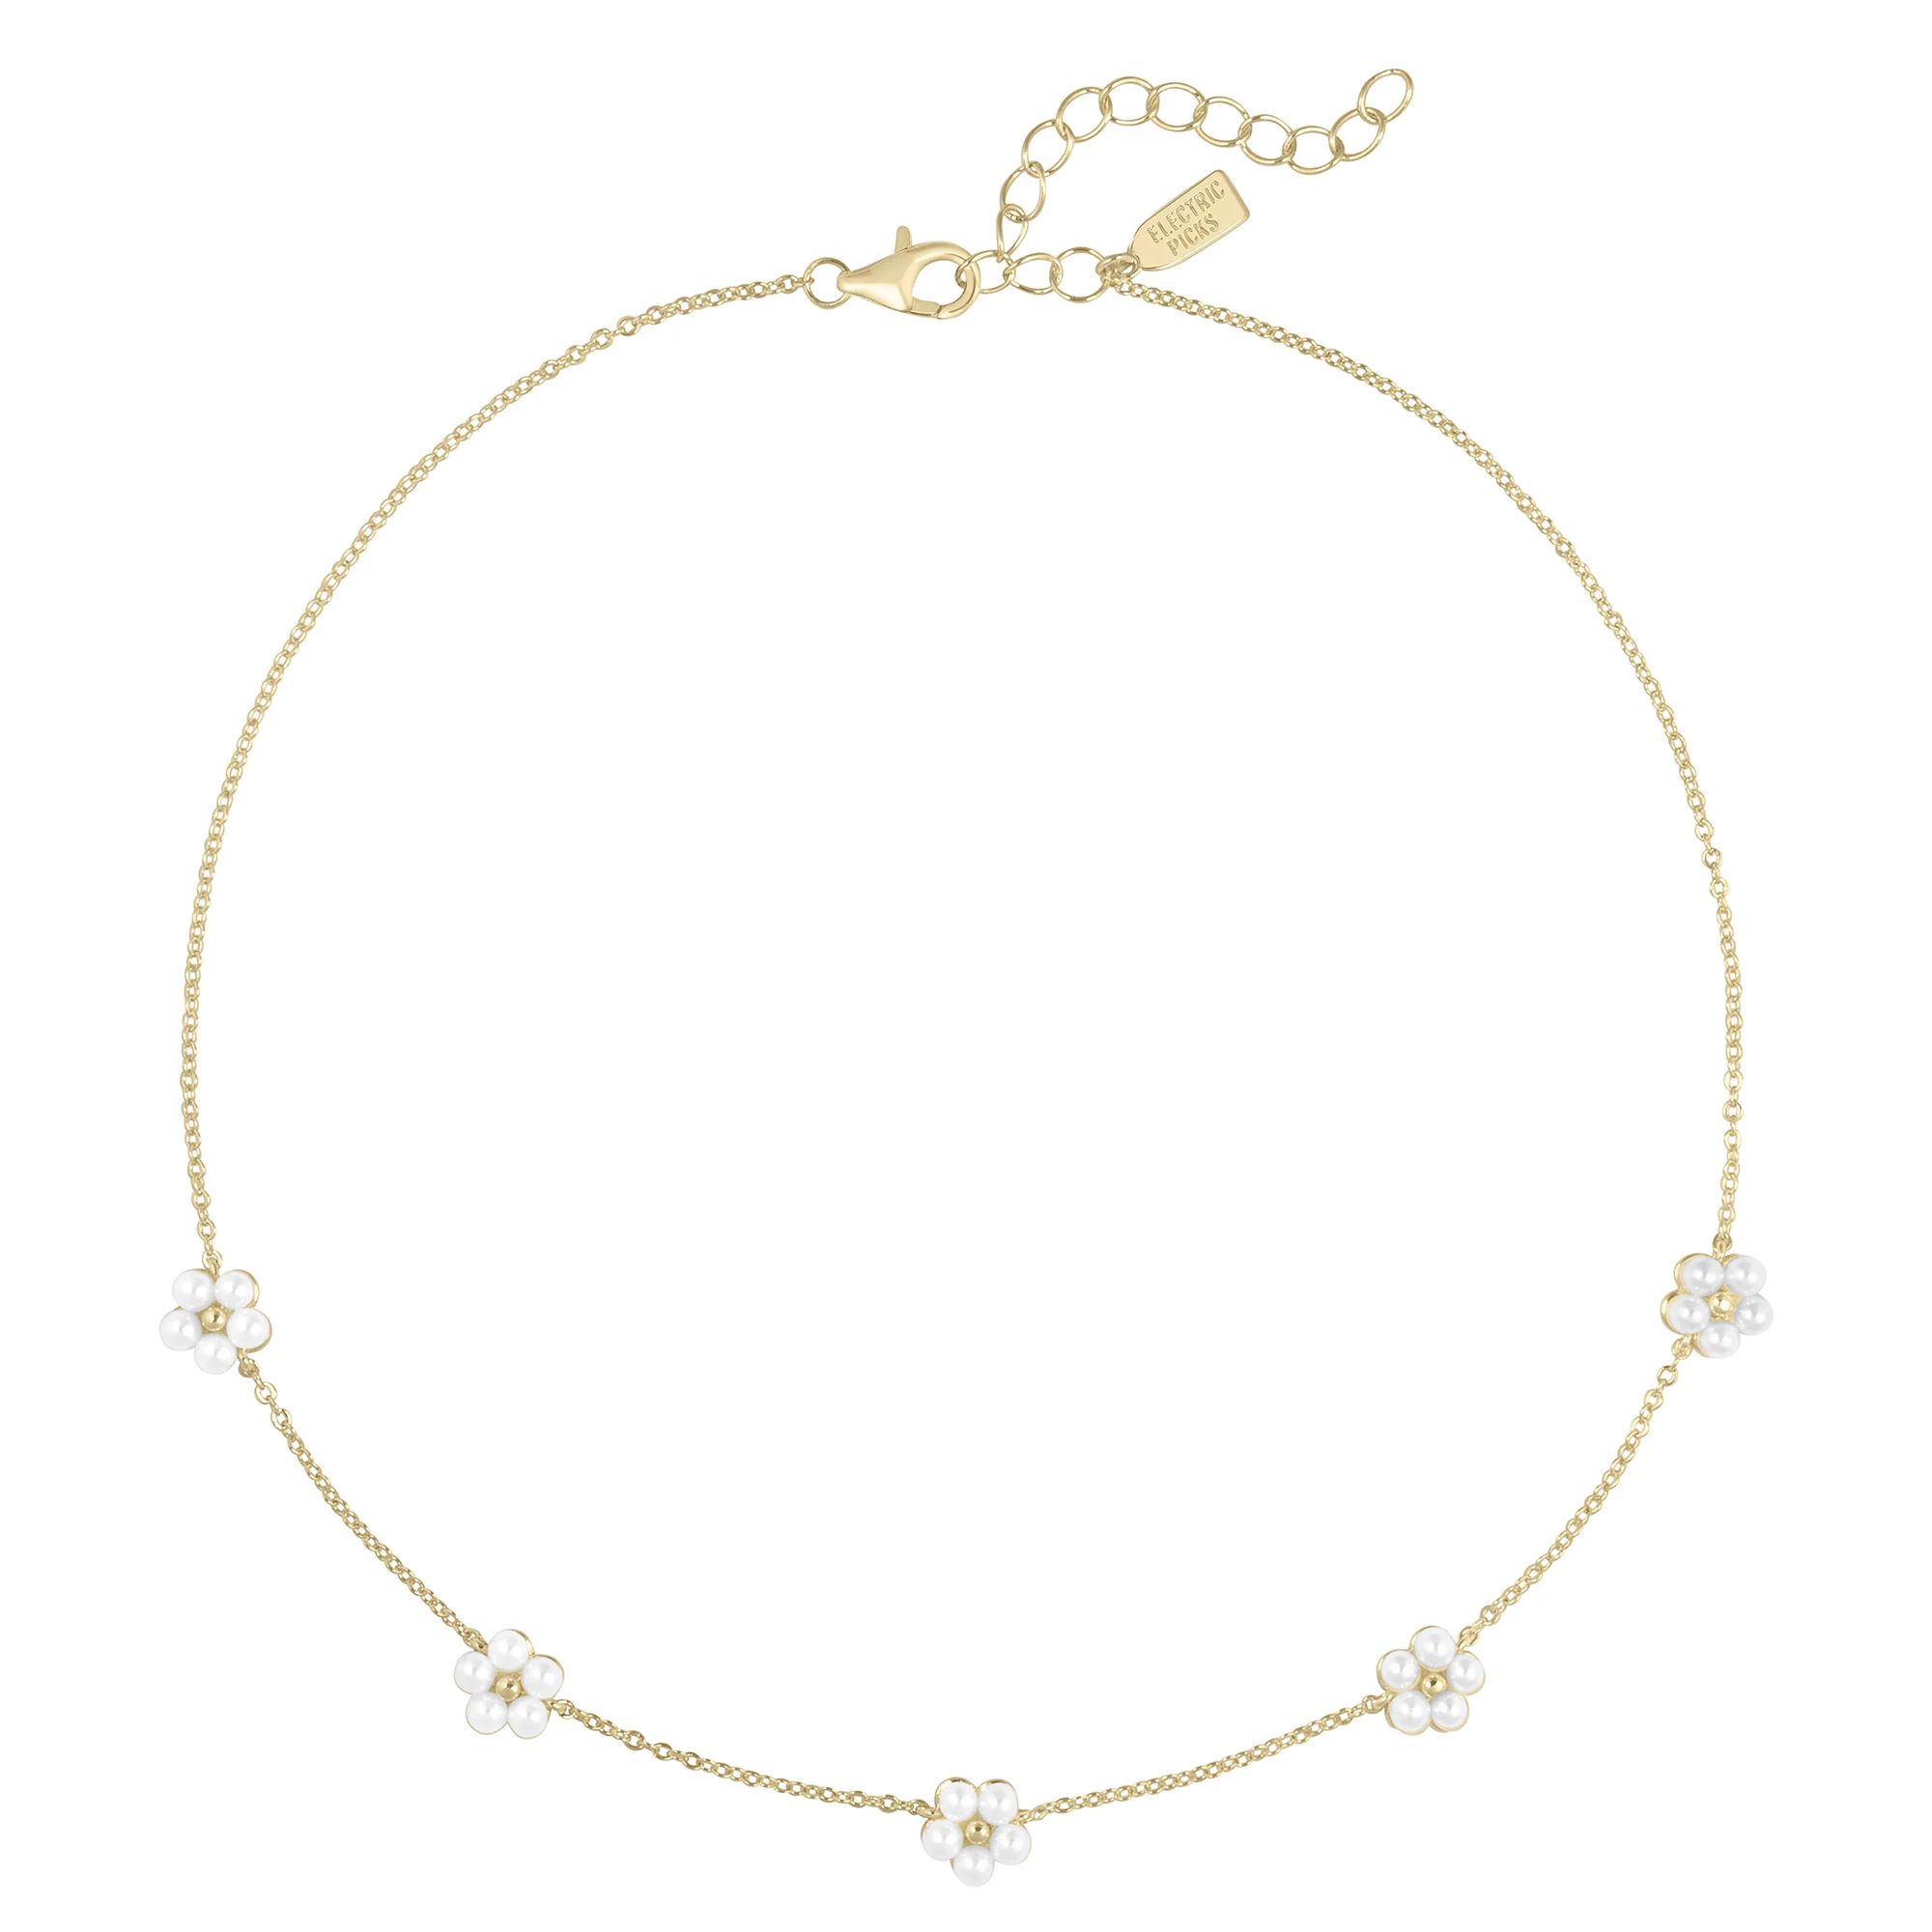 Daisy Duke Necklace | Electric Picks Jewelry